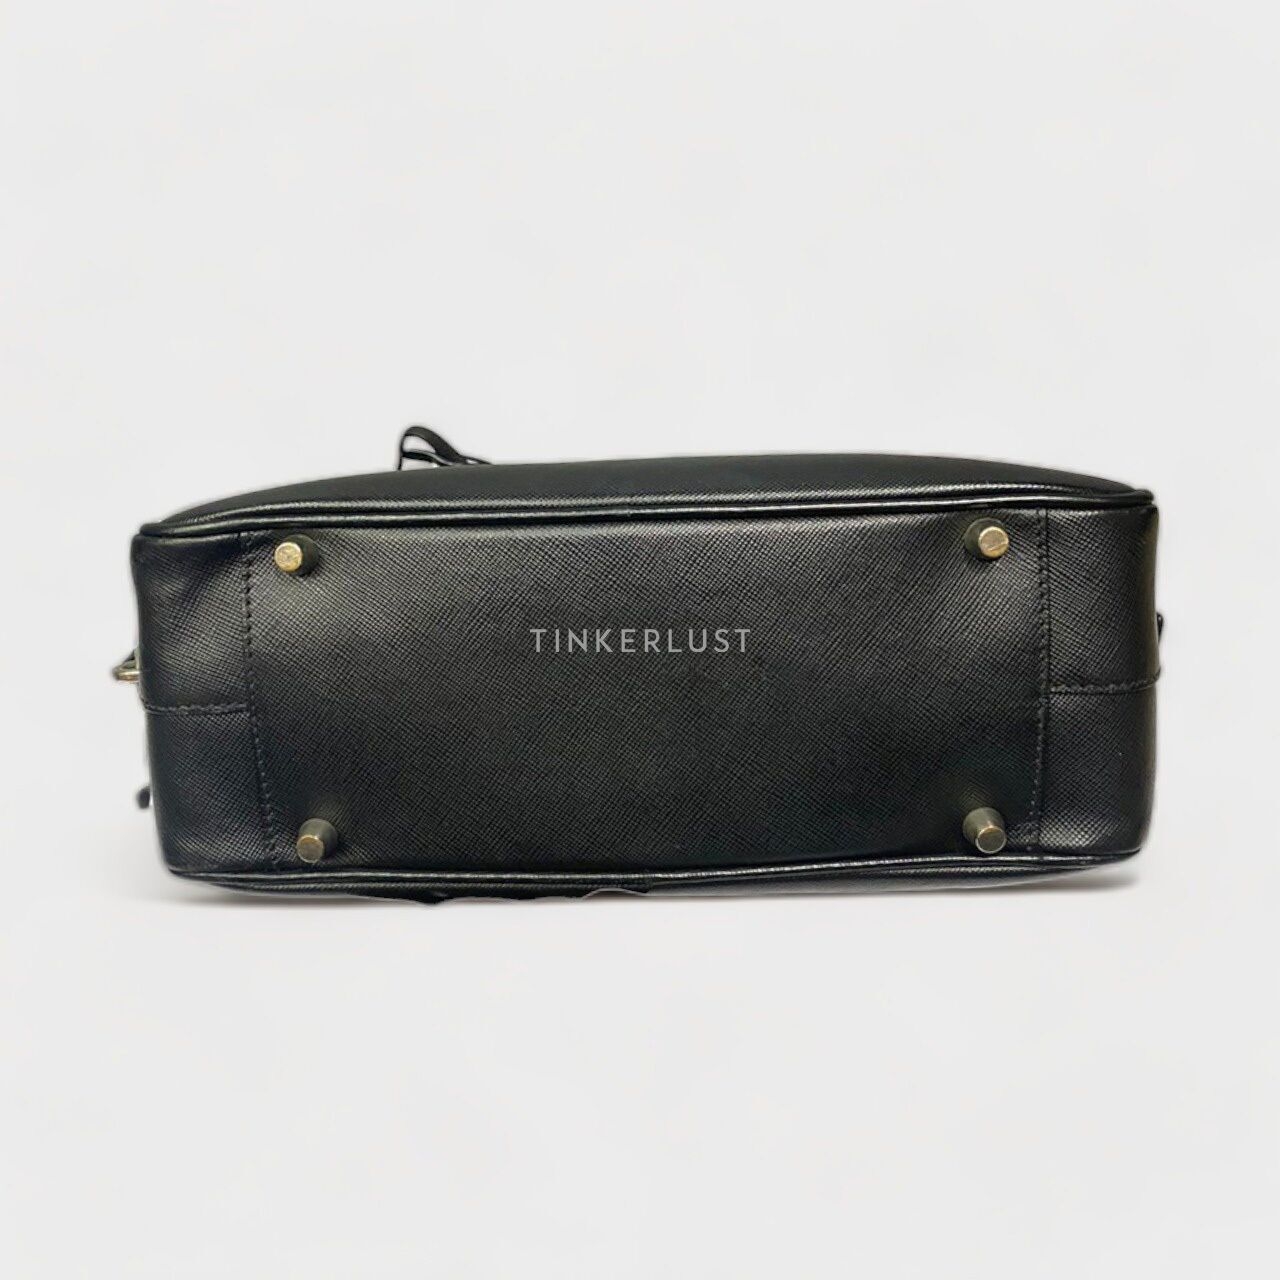 Prada Black Saffiano Leather Briefcase Luggage Bag